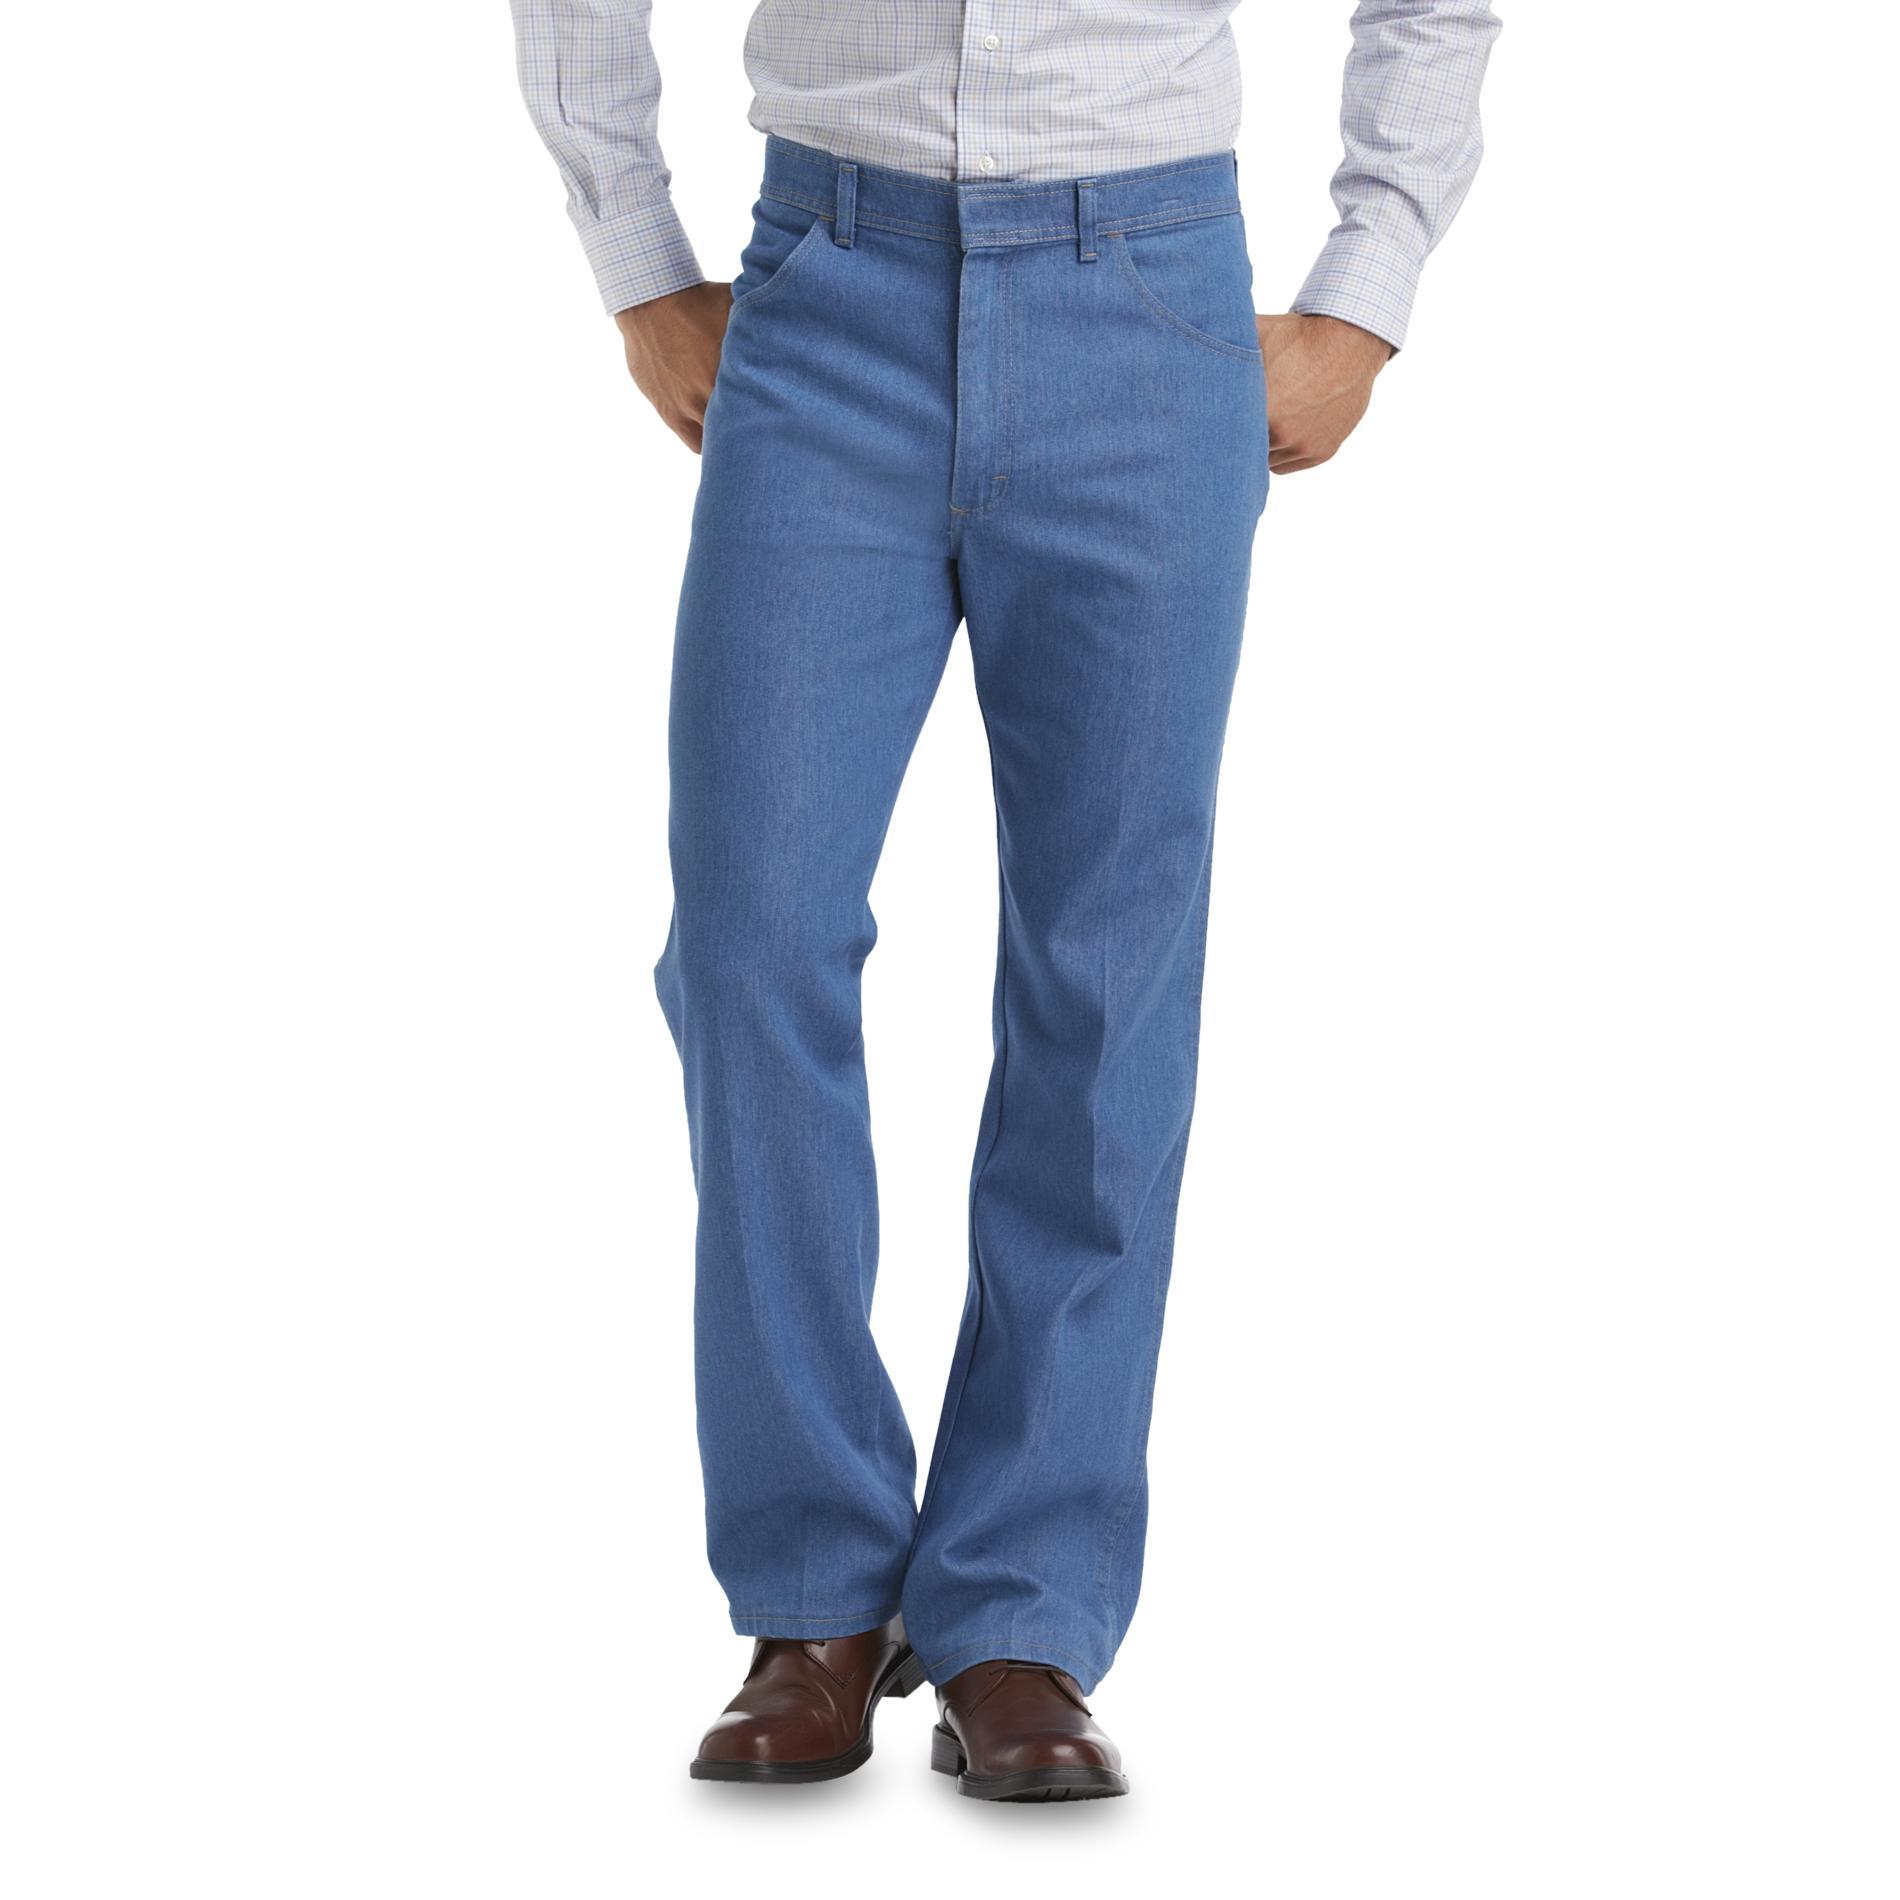 basic editions men's comfort action stretch regular fit jeans